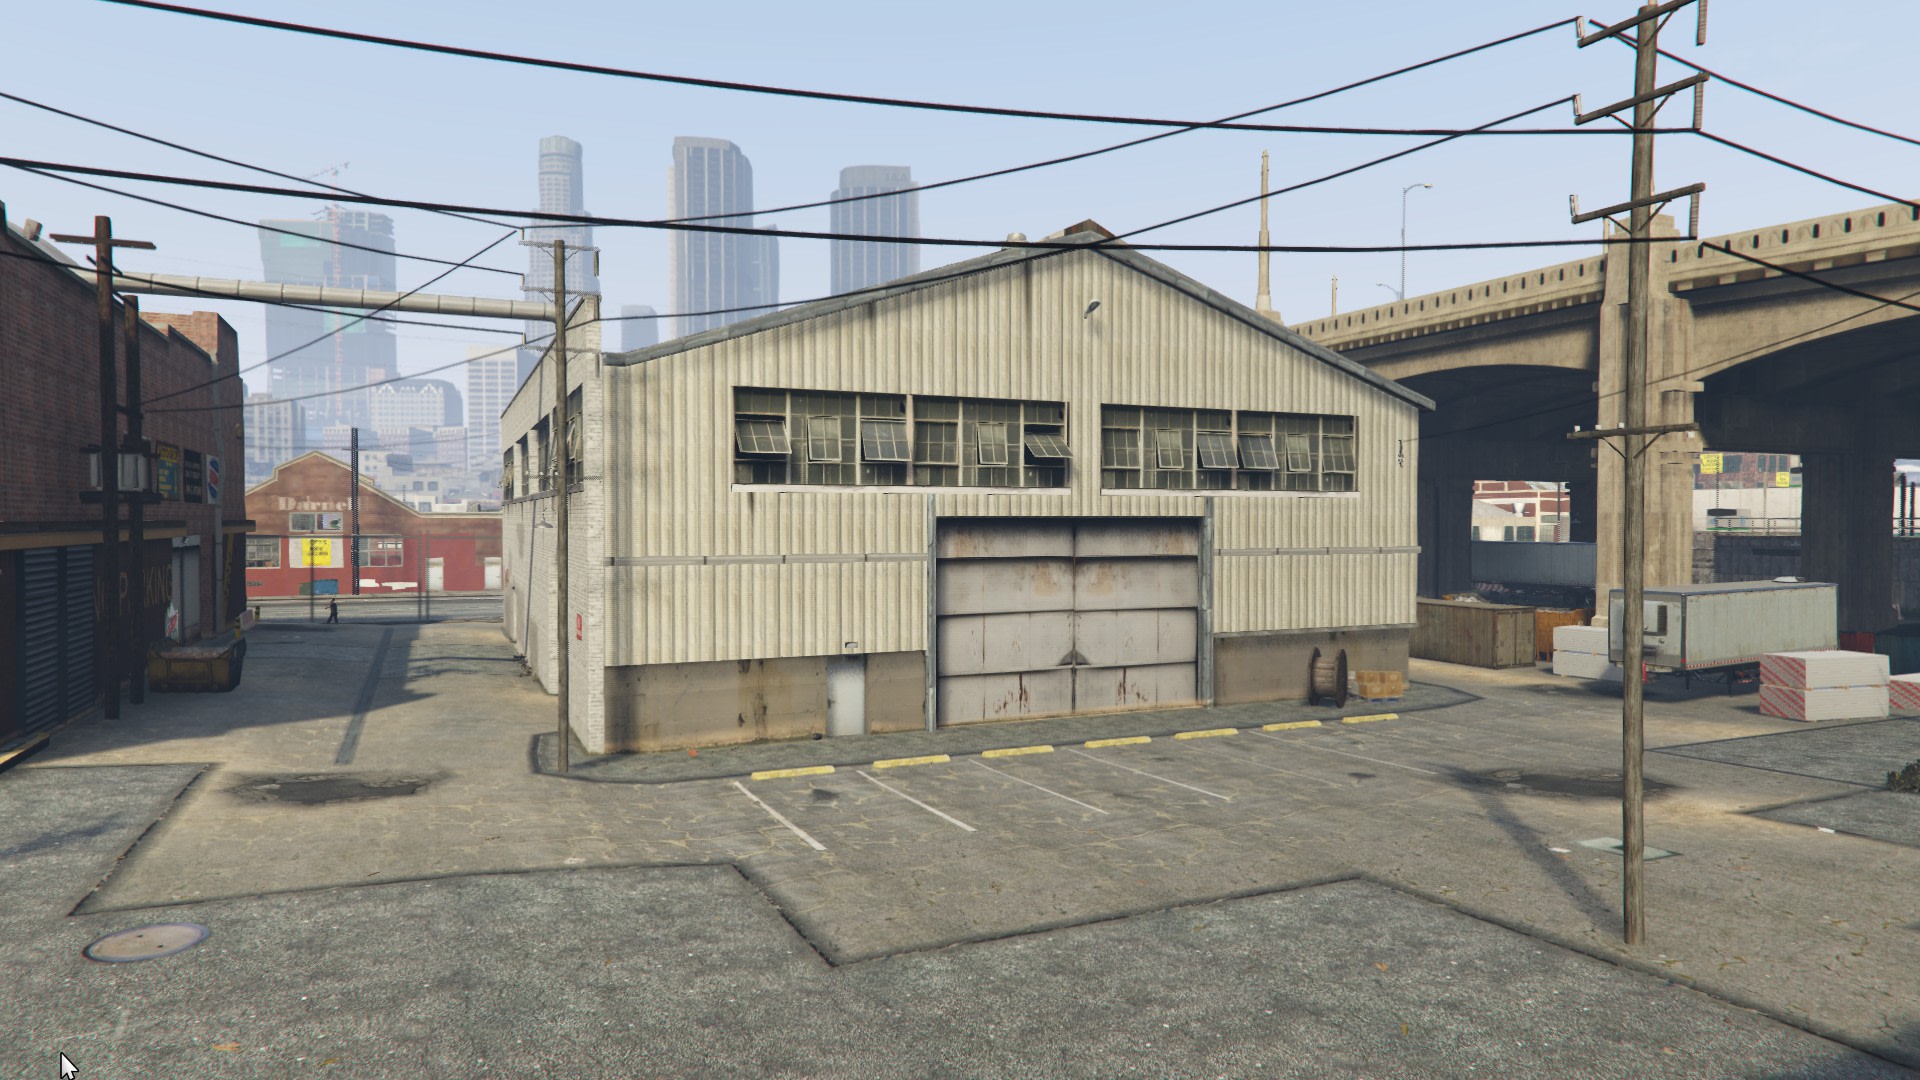 Darnel Bros Warehouse - Large Cargo Warehouse in GTA Online on the GTA